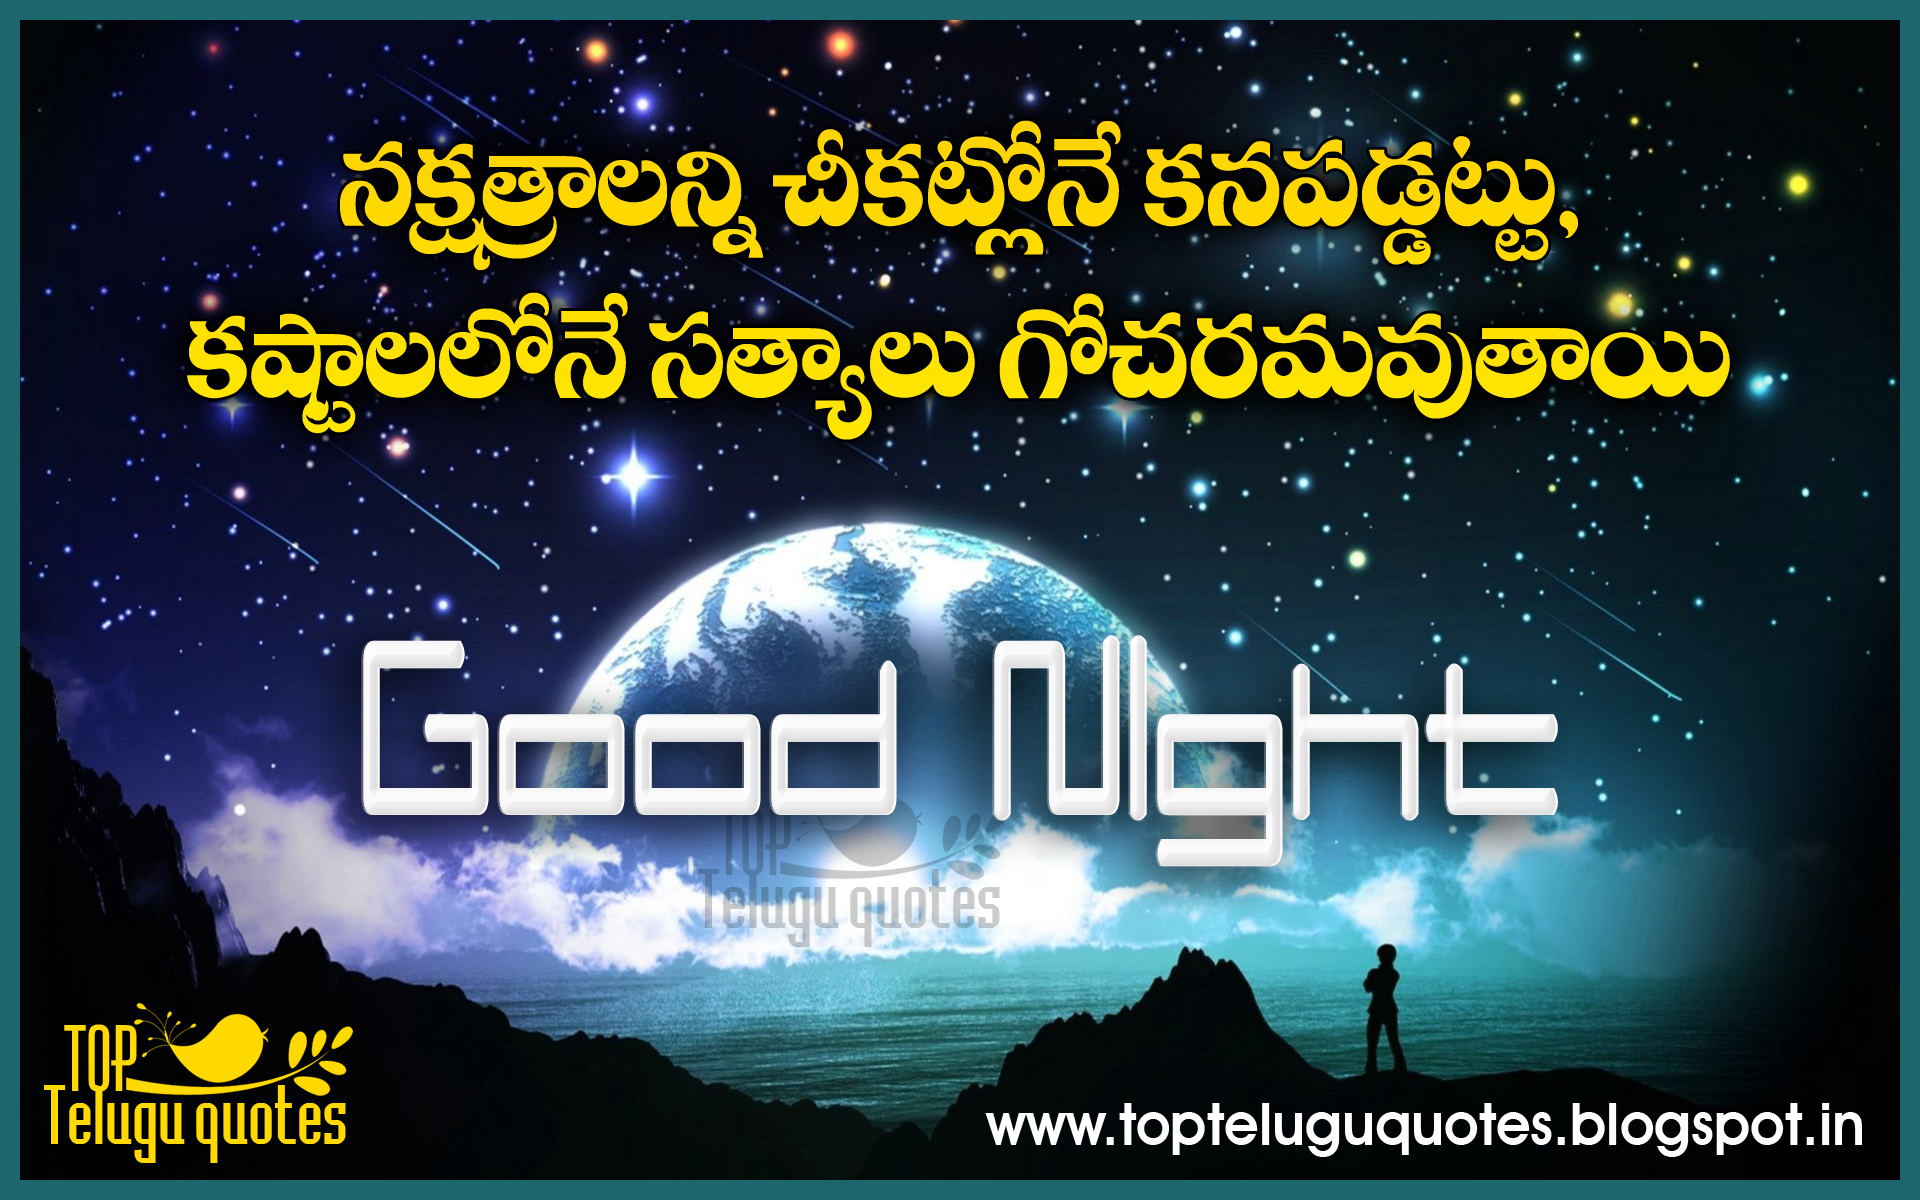 latest famous good night quotes images in telugu language